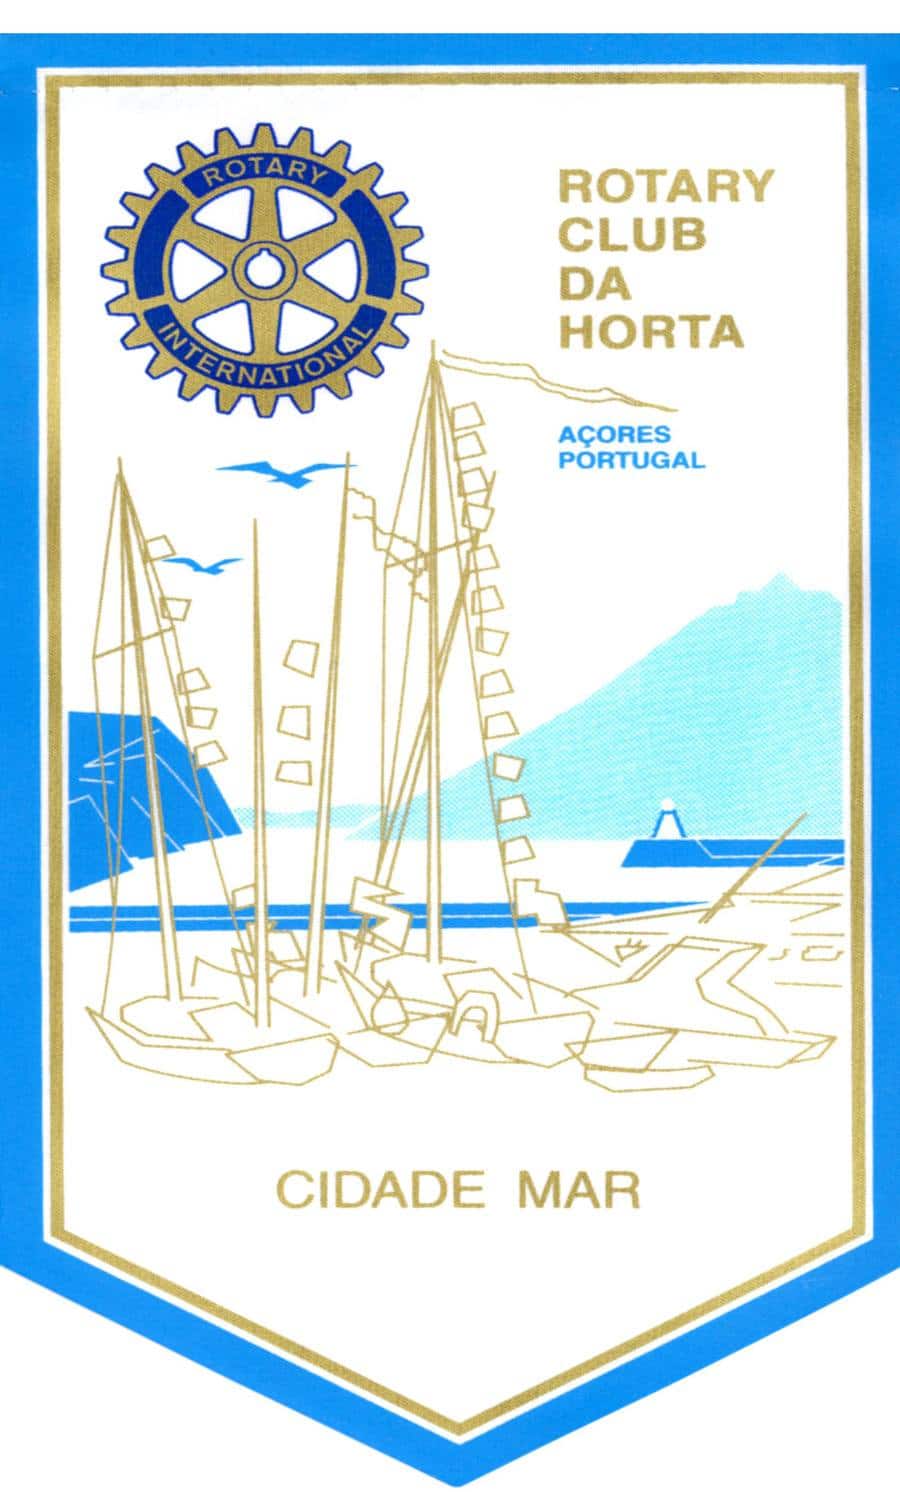 Rotary Club da Horta